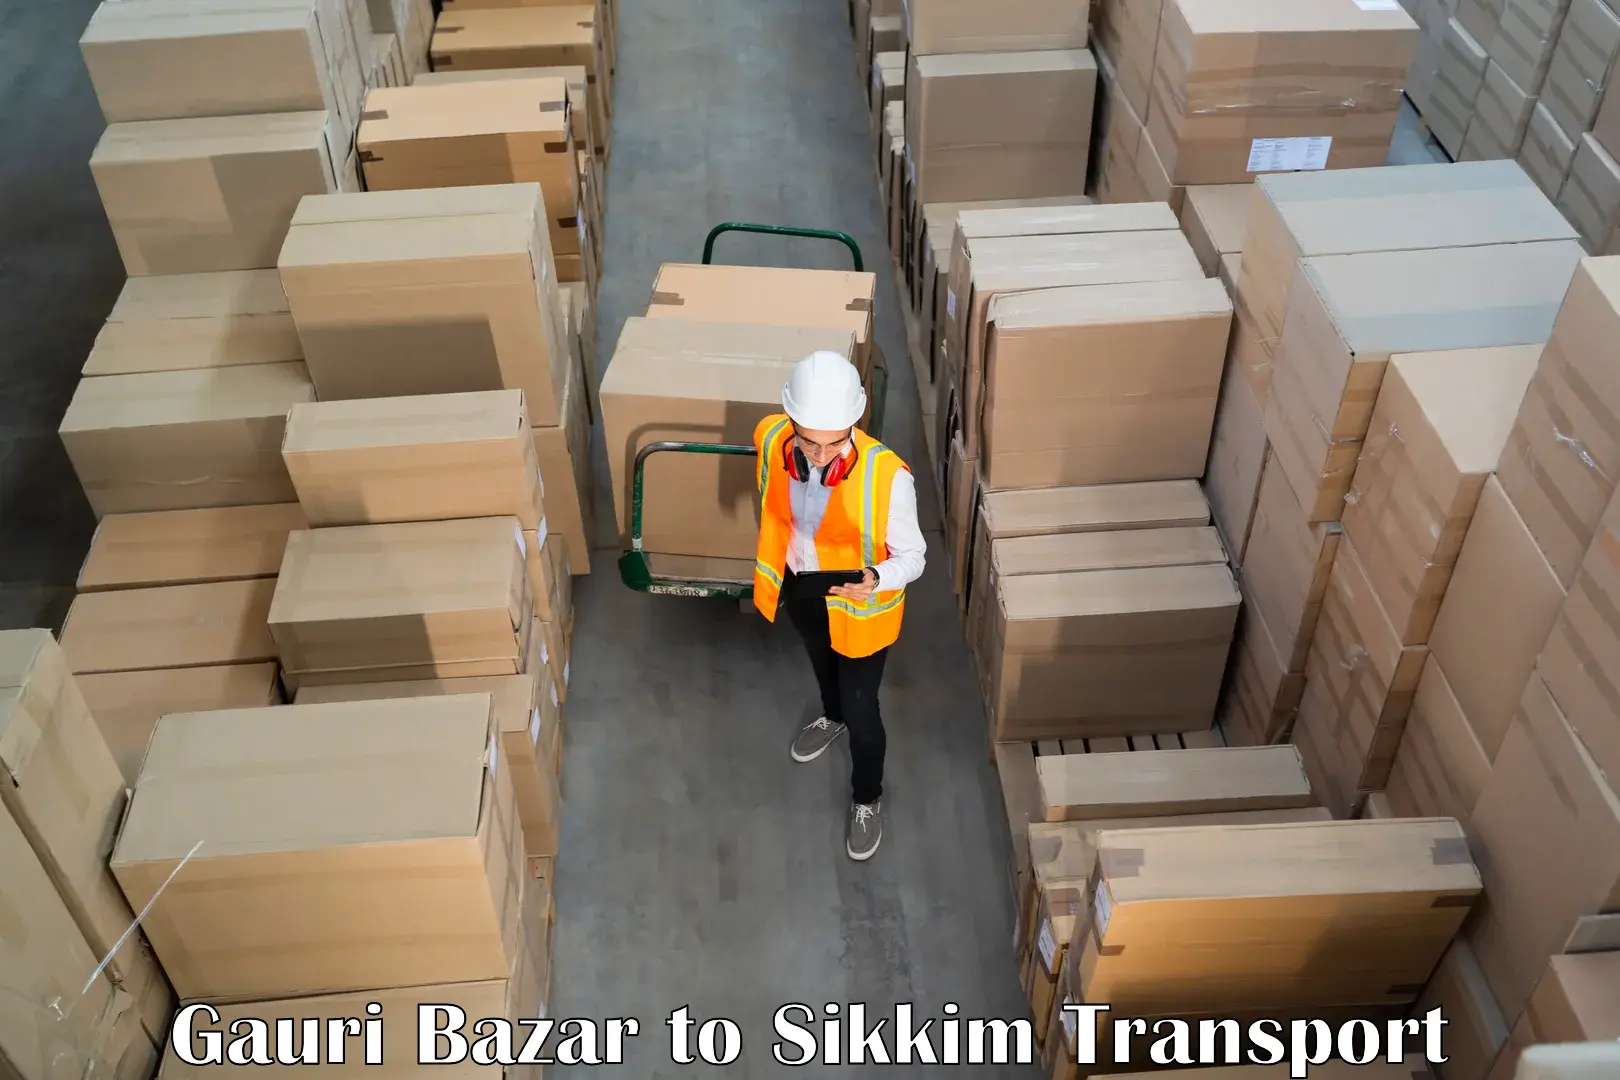 Shipping partner Gauri Bazar to Pelling